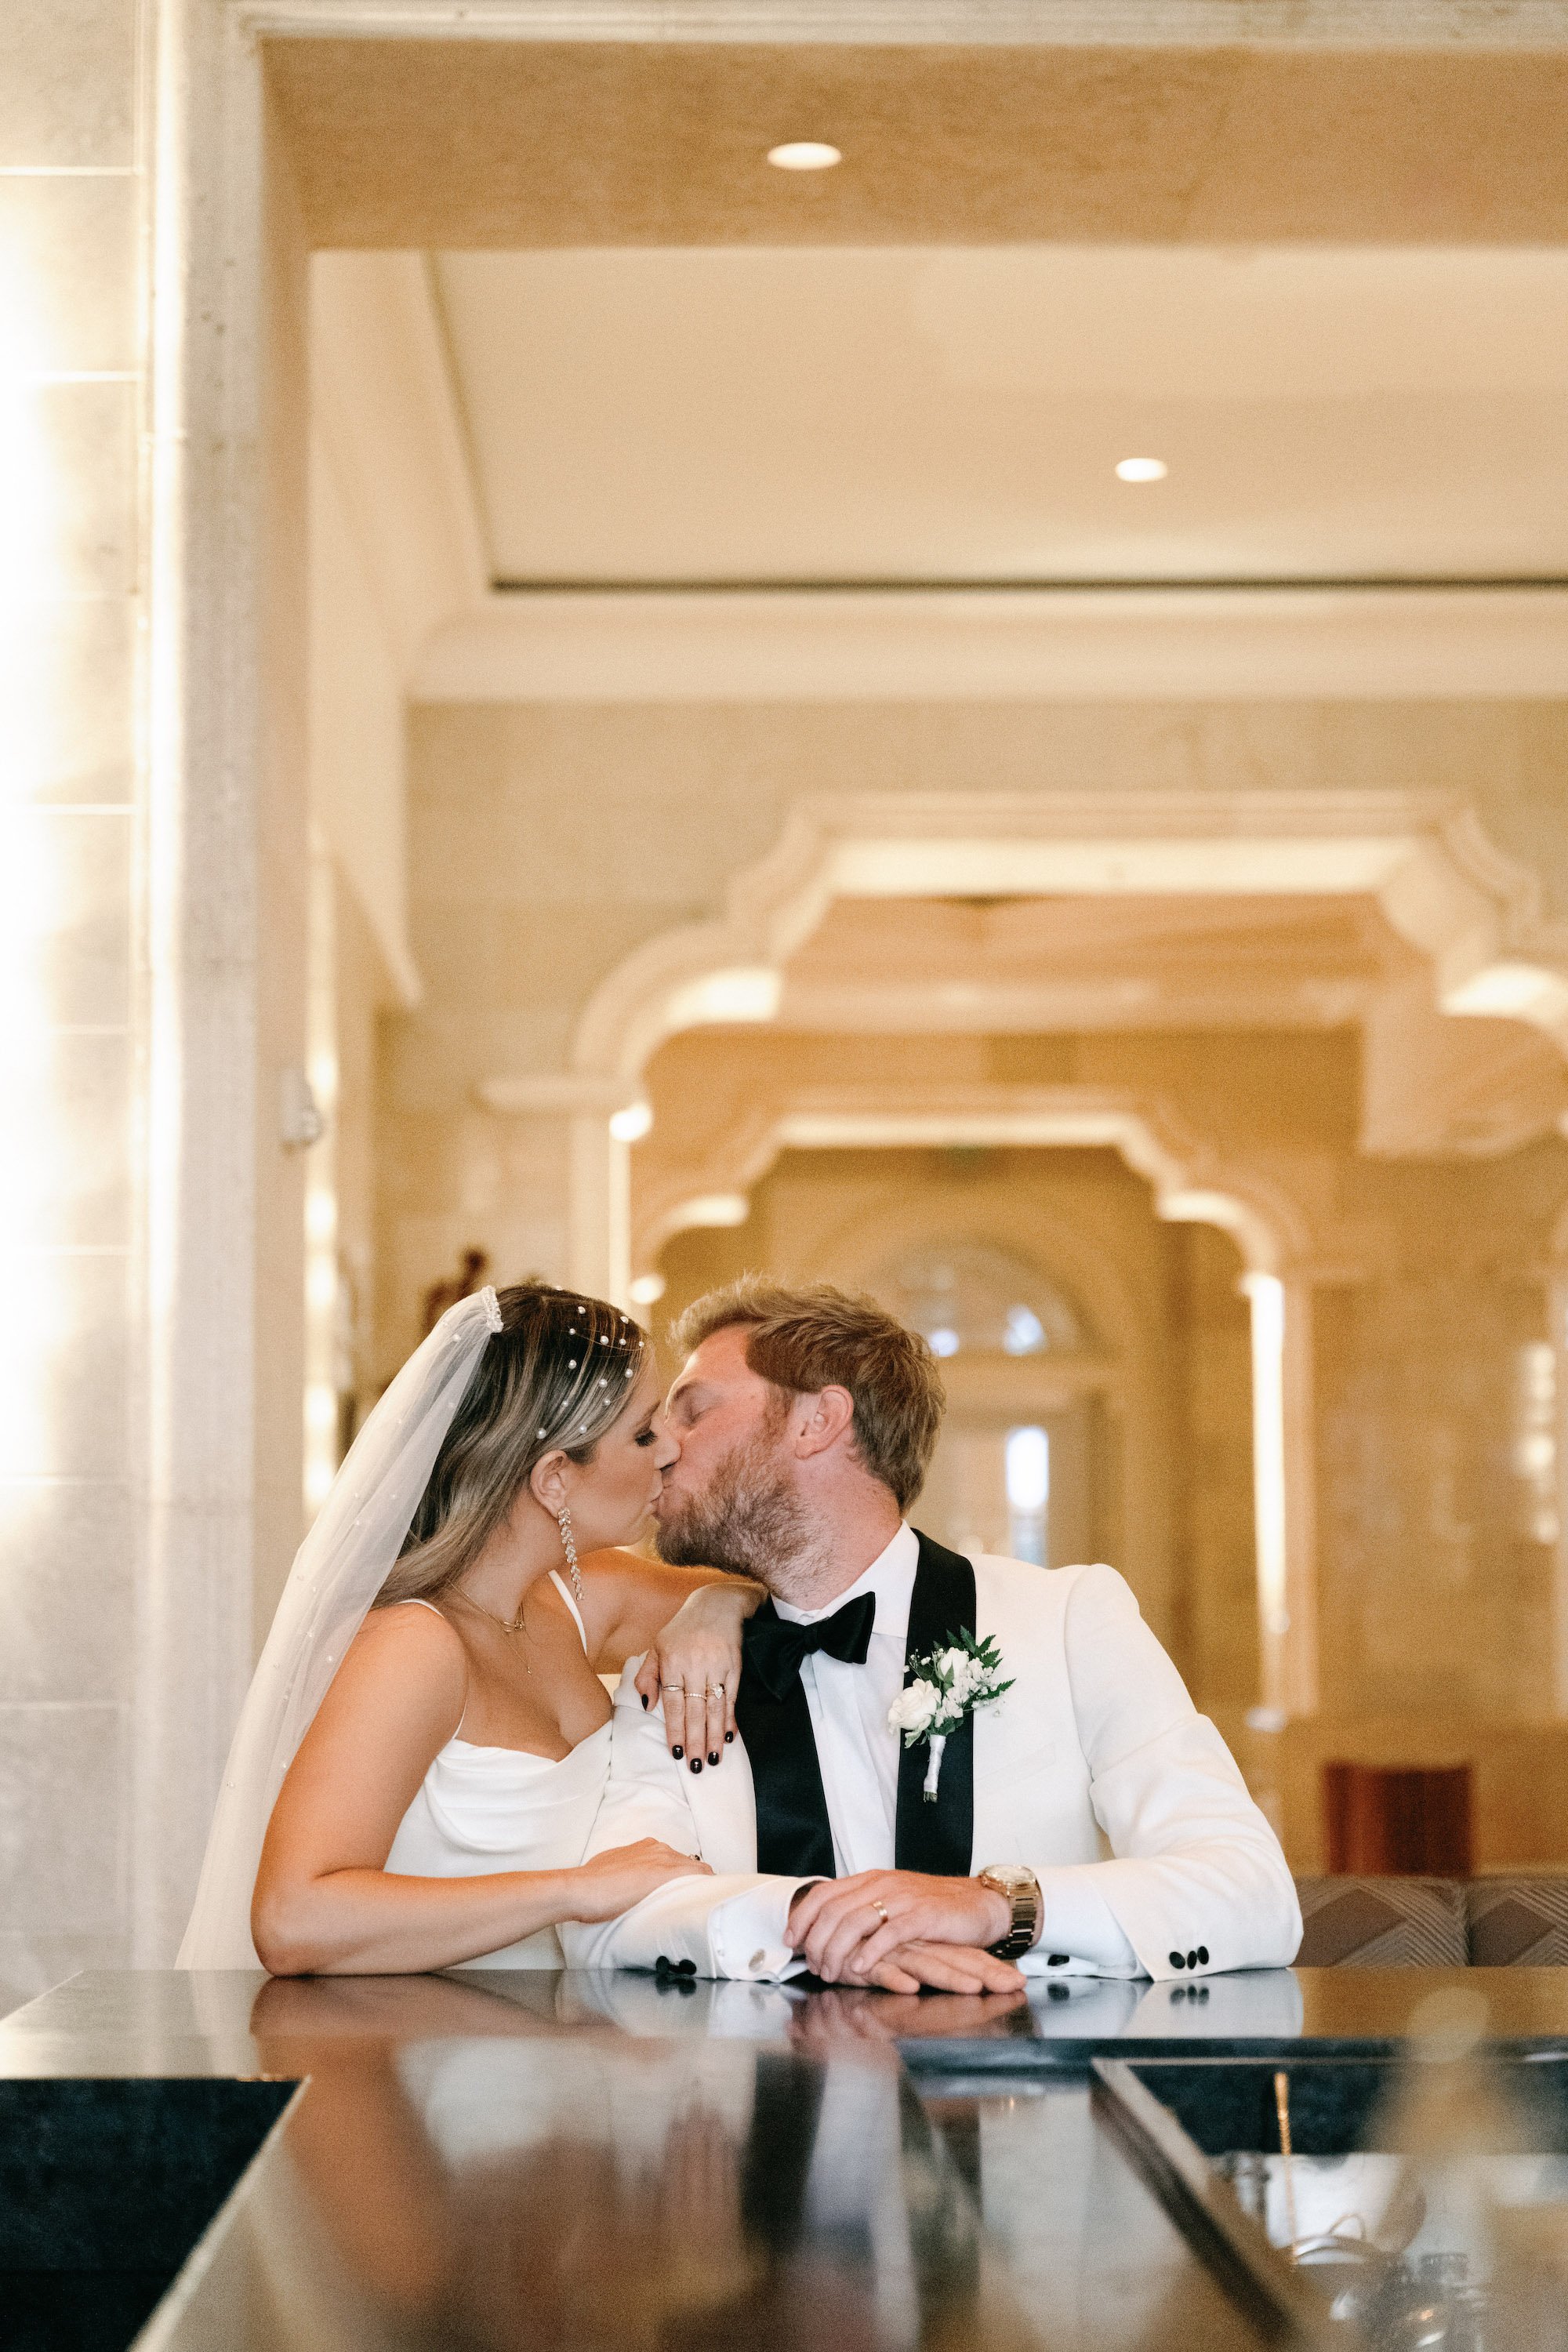 31Timeless White Courtyard Wedding | Ritz Carlton Orlando | Photographers Dewitt for Love Photography.jpg